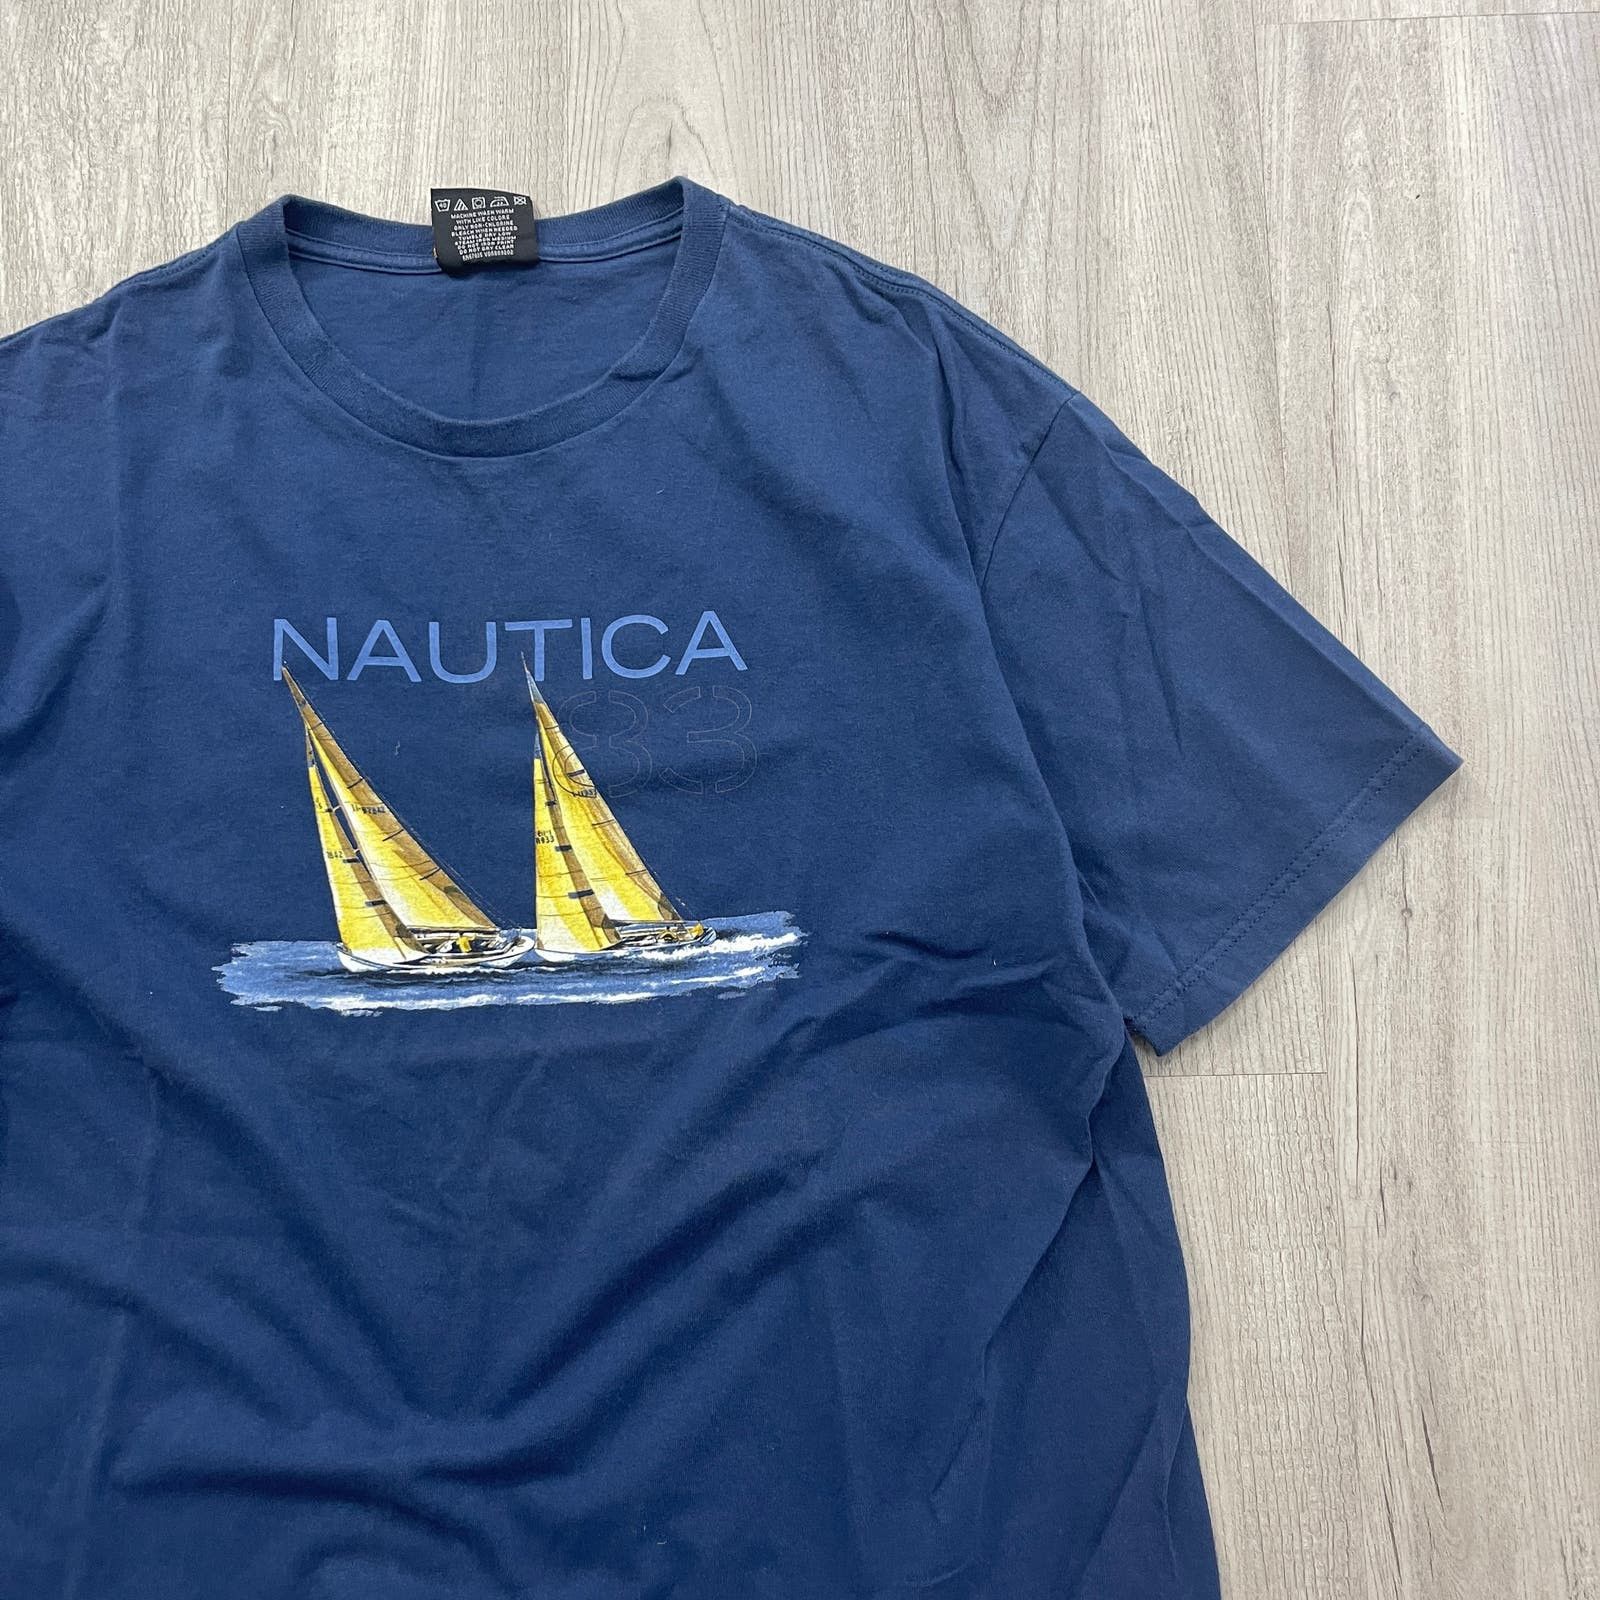 Nautica VINTAGE 90s Nautica Competition Sailing Boat Shirt Large Size US XL / EU 56 / 4 - 2 Preview